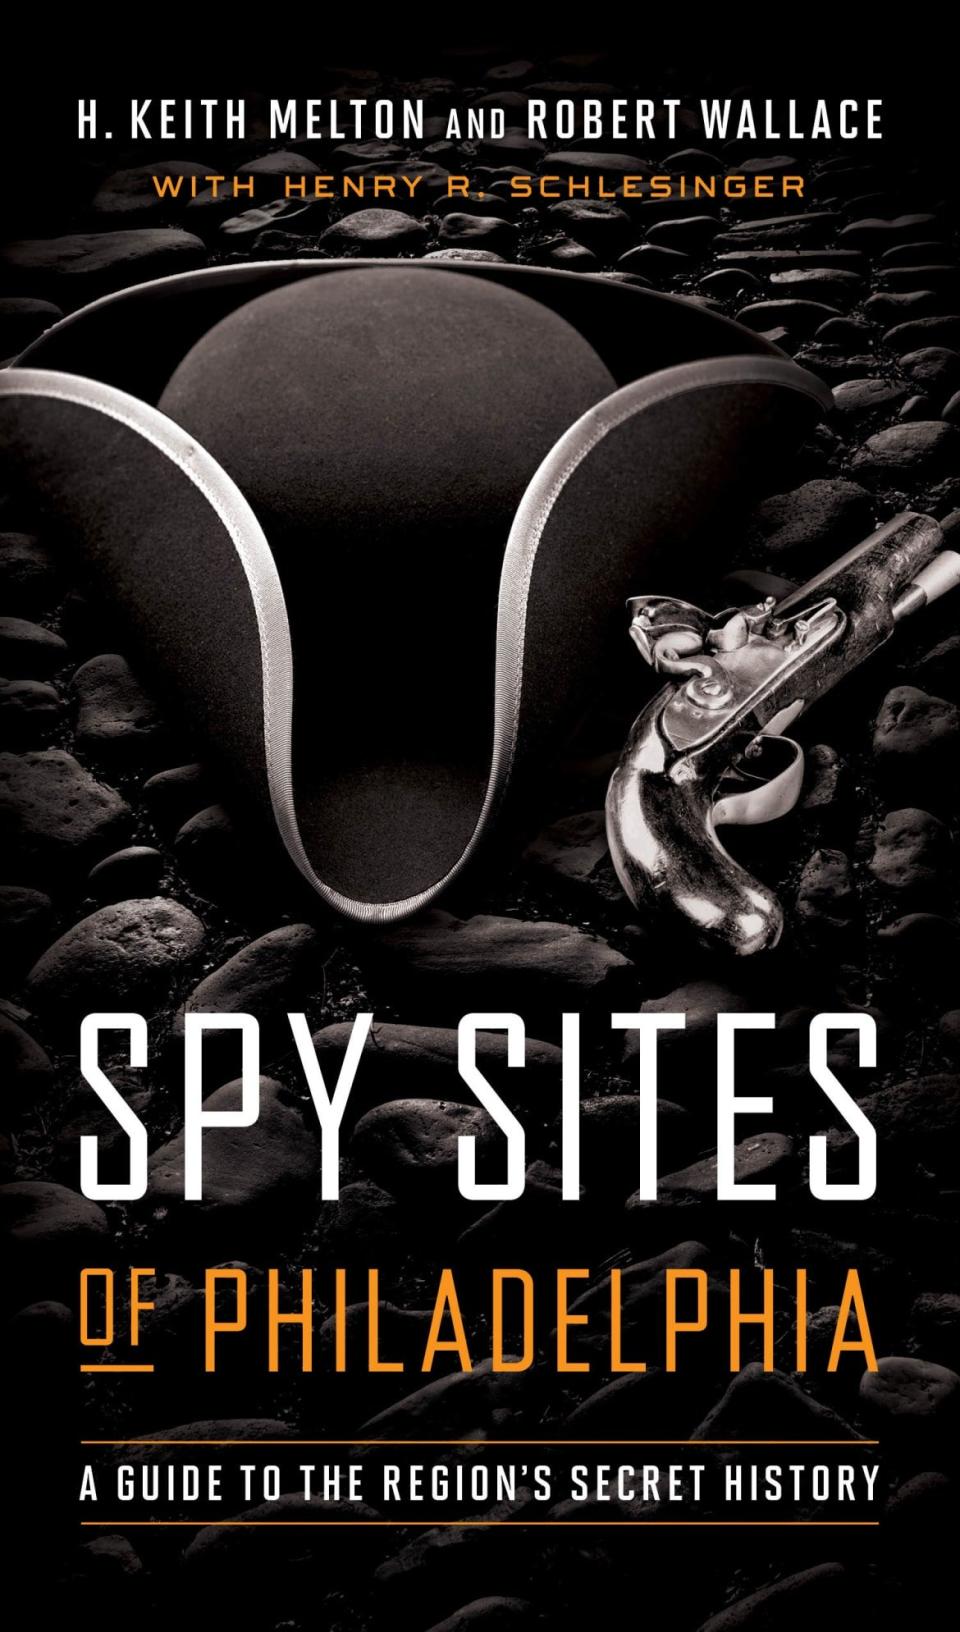 <div class="inline-image__caption"><p><strong><em><a href="https://www.amazon.com/Spy-Sites-Philadelphia-Regions-History/dp/1647120179" rel="nofollow noopener" target="_blank" data-ylk="slk:Spy Sites of Philadelphia;elm:context_link;itc:0;sec:content-canvas" class="link ">Spy Sites of Philadelphia</a></em></strong></p></div> <div class="inline-image__credit">Georgetown University Press</div>